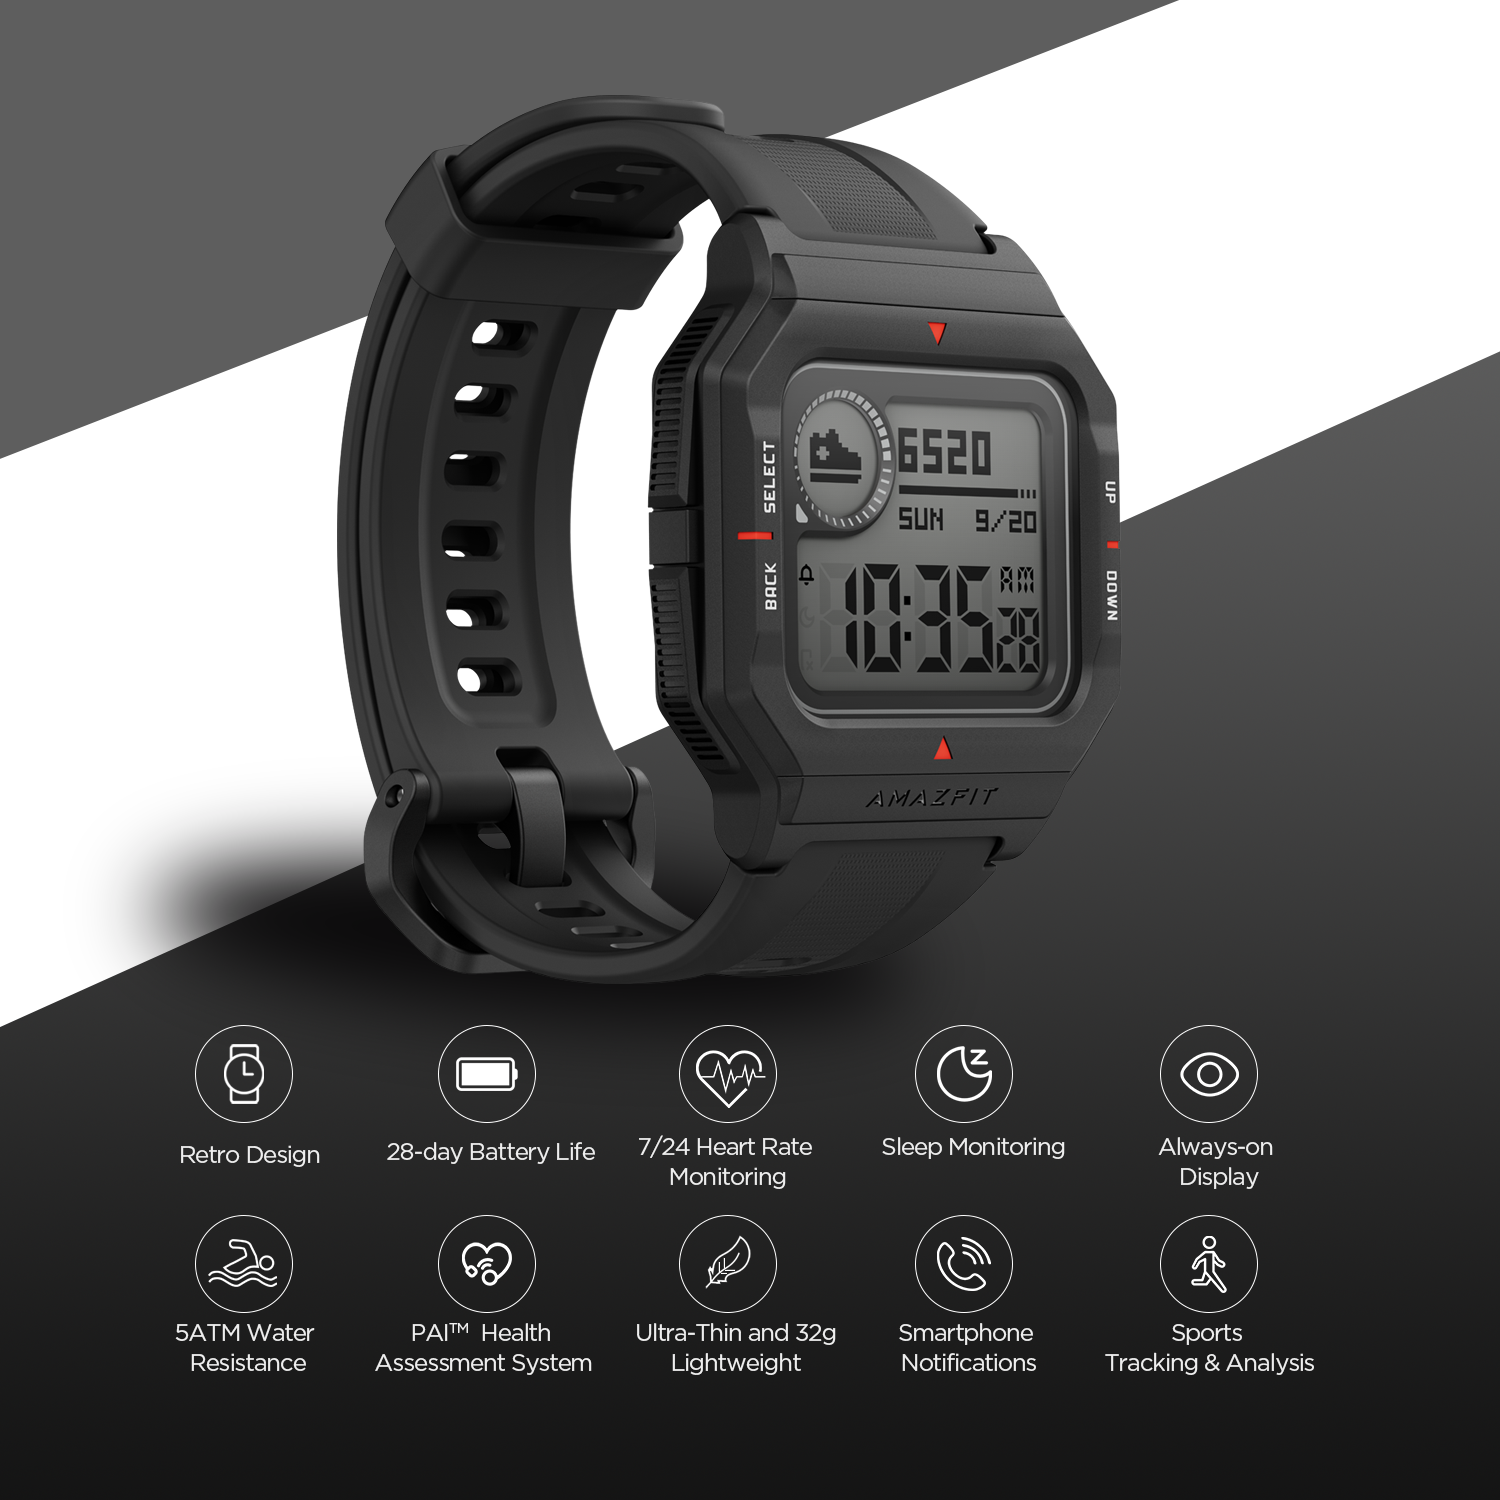 Amazfit Neo Negro - Smartwatch